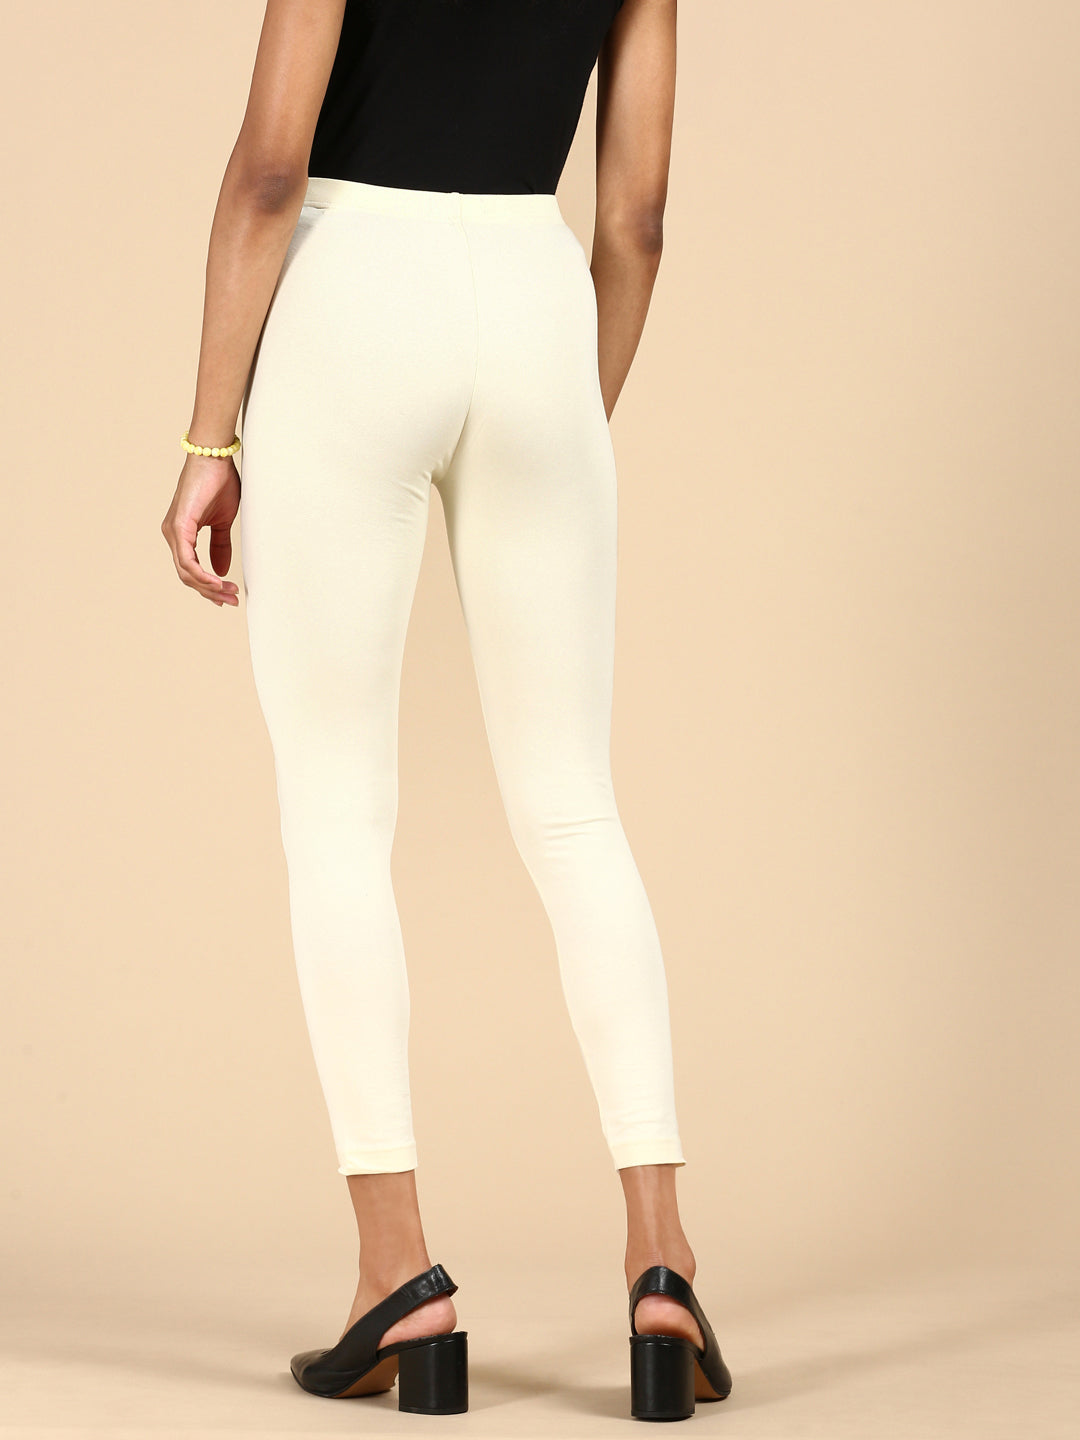 100 cotton black and white stripe capri leggings fashion c… | Flickr